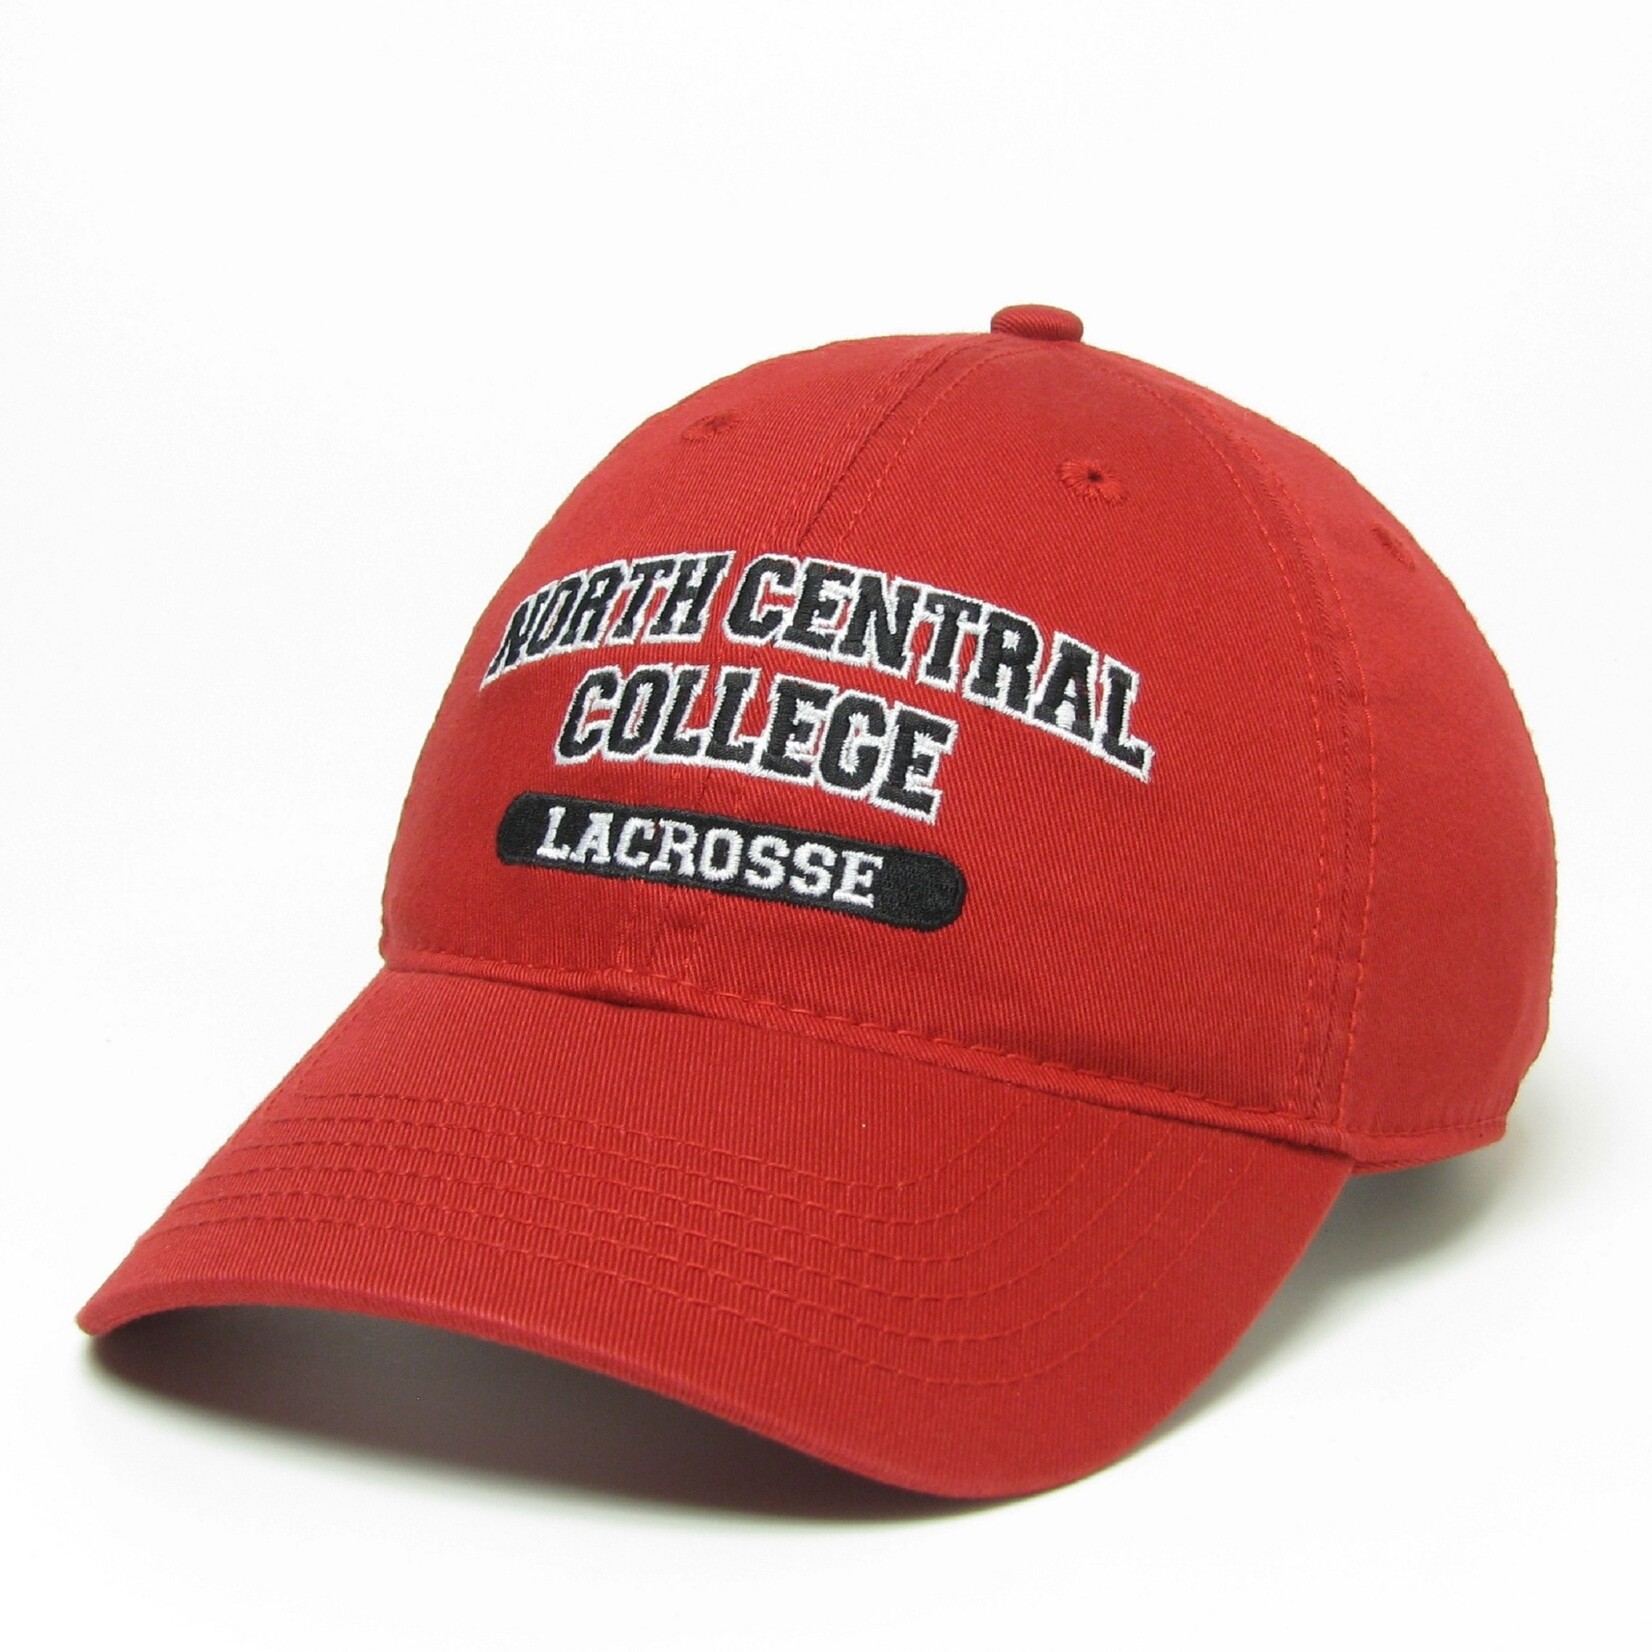 League / Legacy Name Drop Hats - Sports